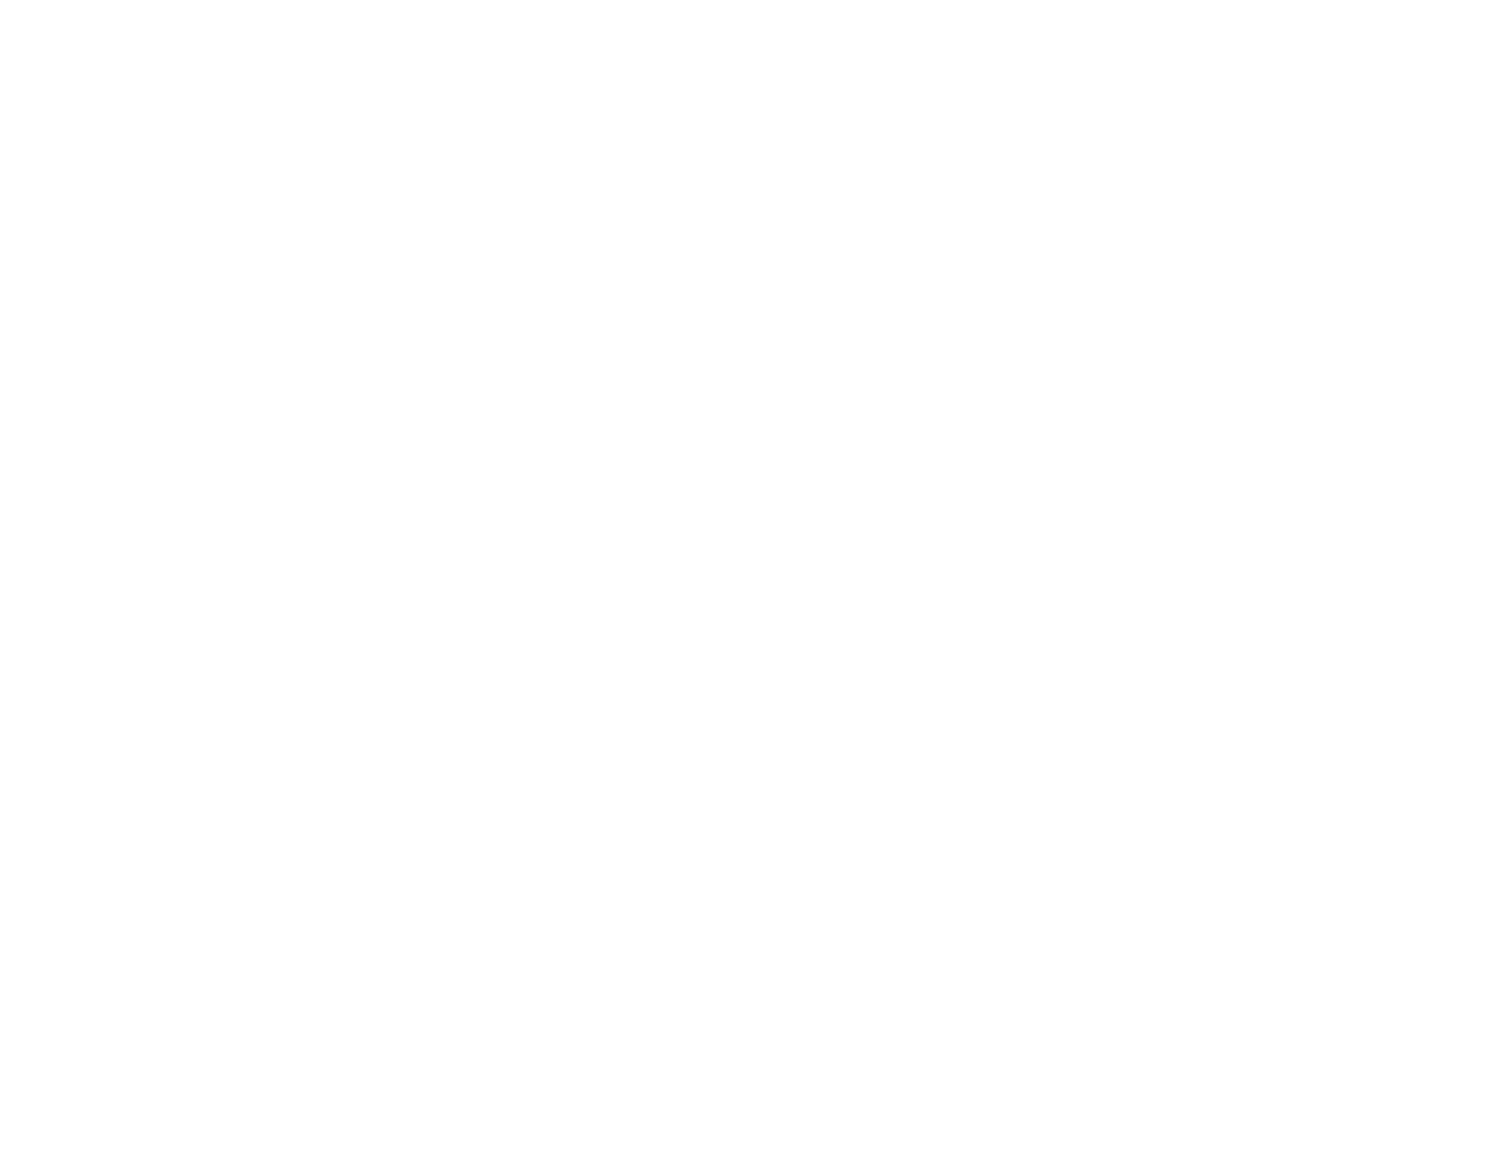 Skylar Smith Illustration